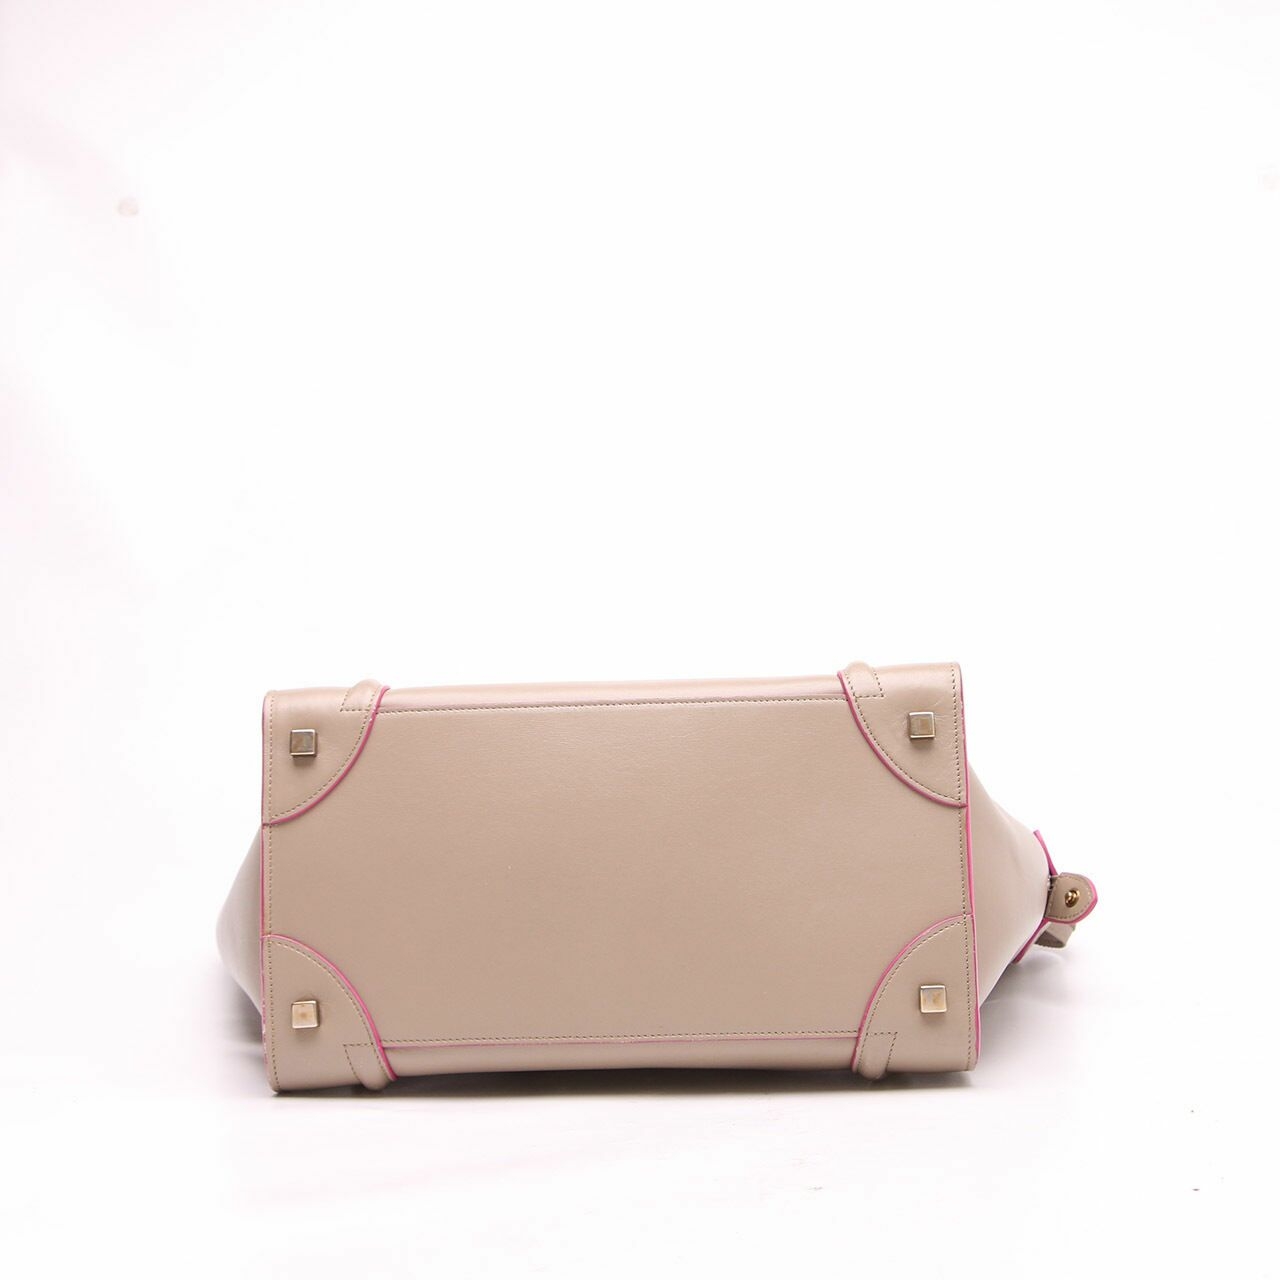 Celine Taupe Smooth Calfskin Leather Mini Luggage Tote Bag